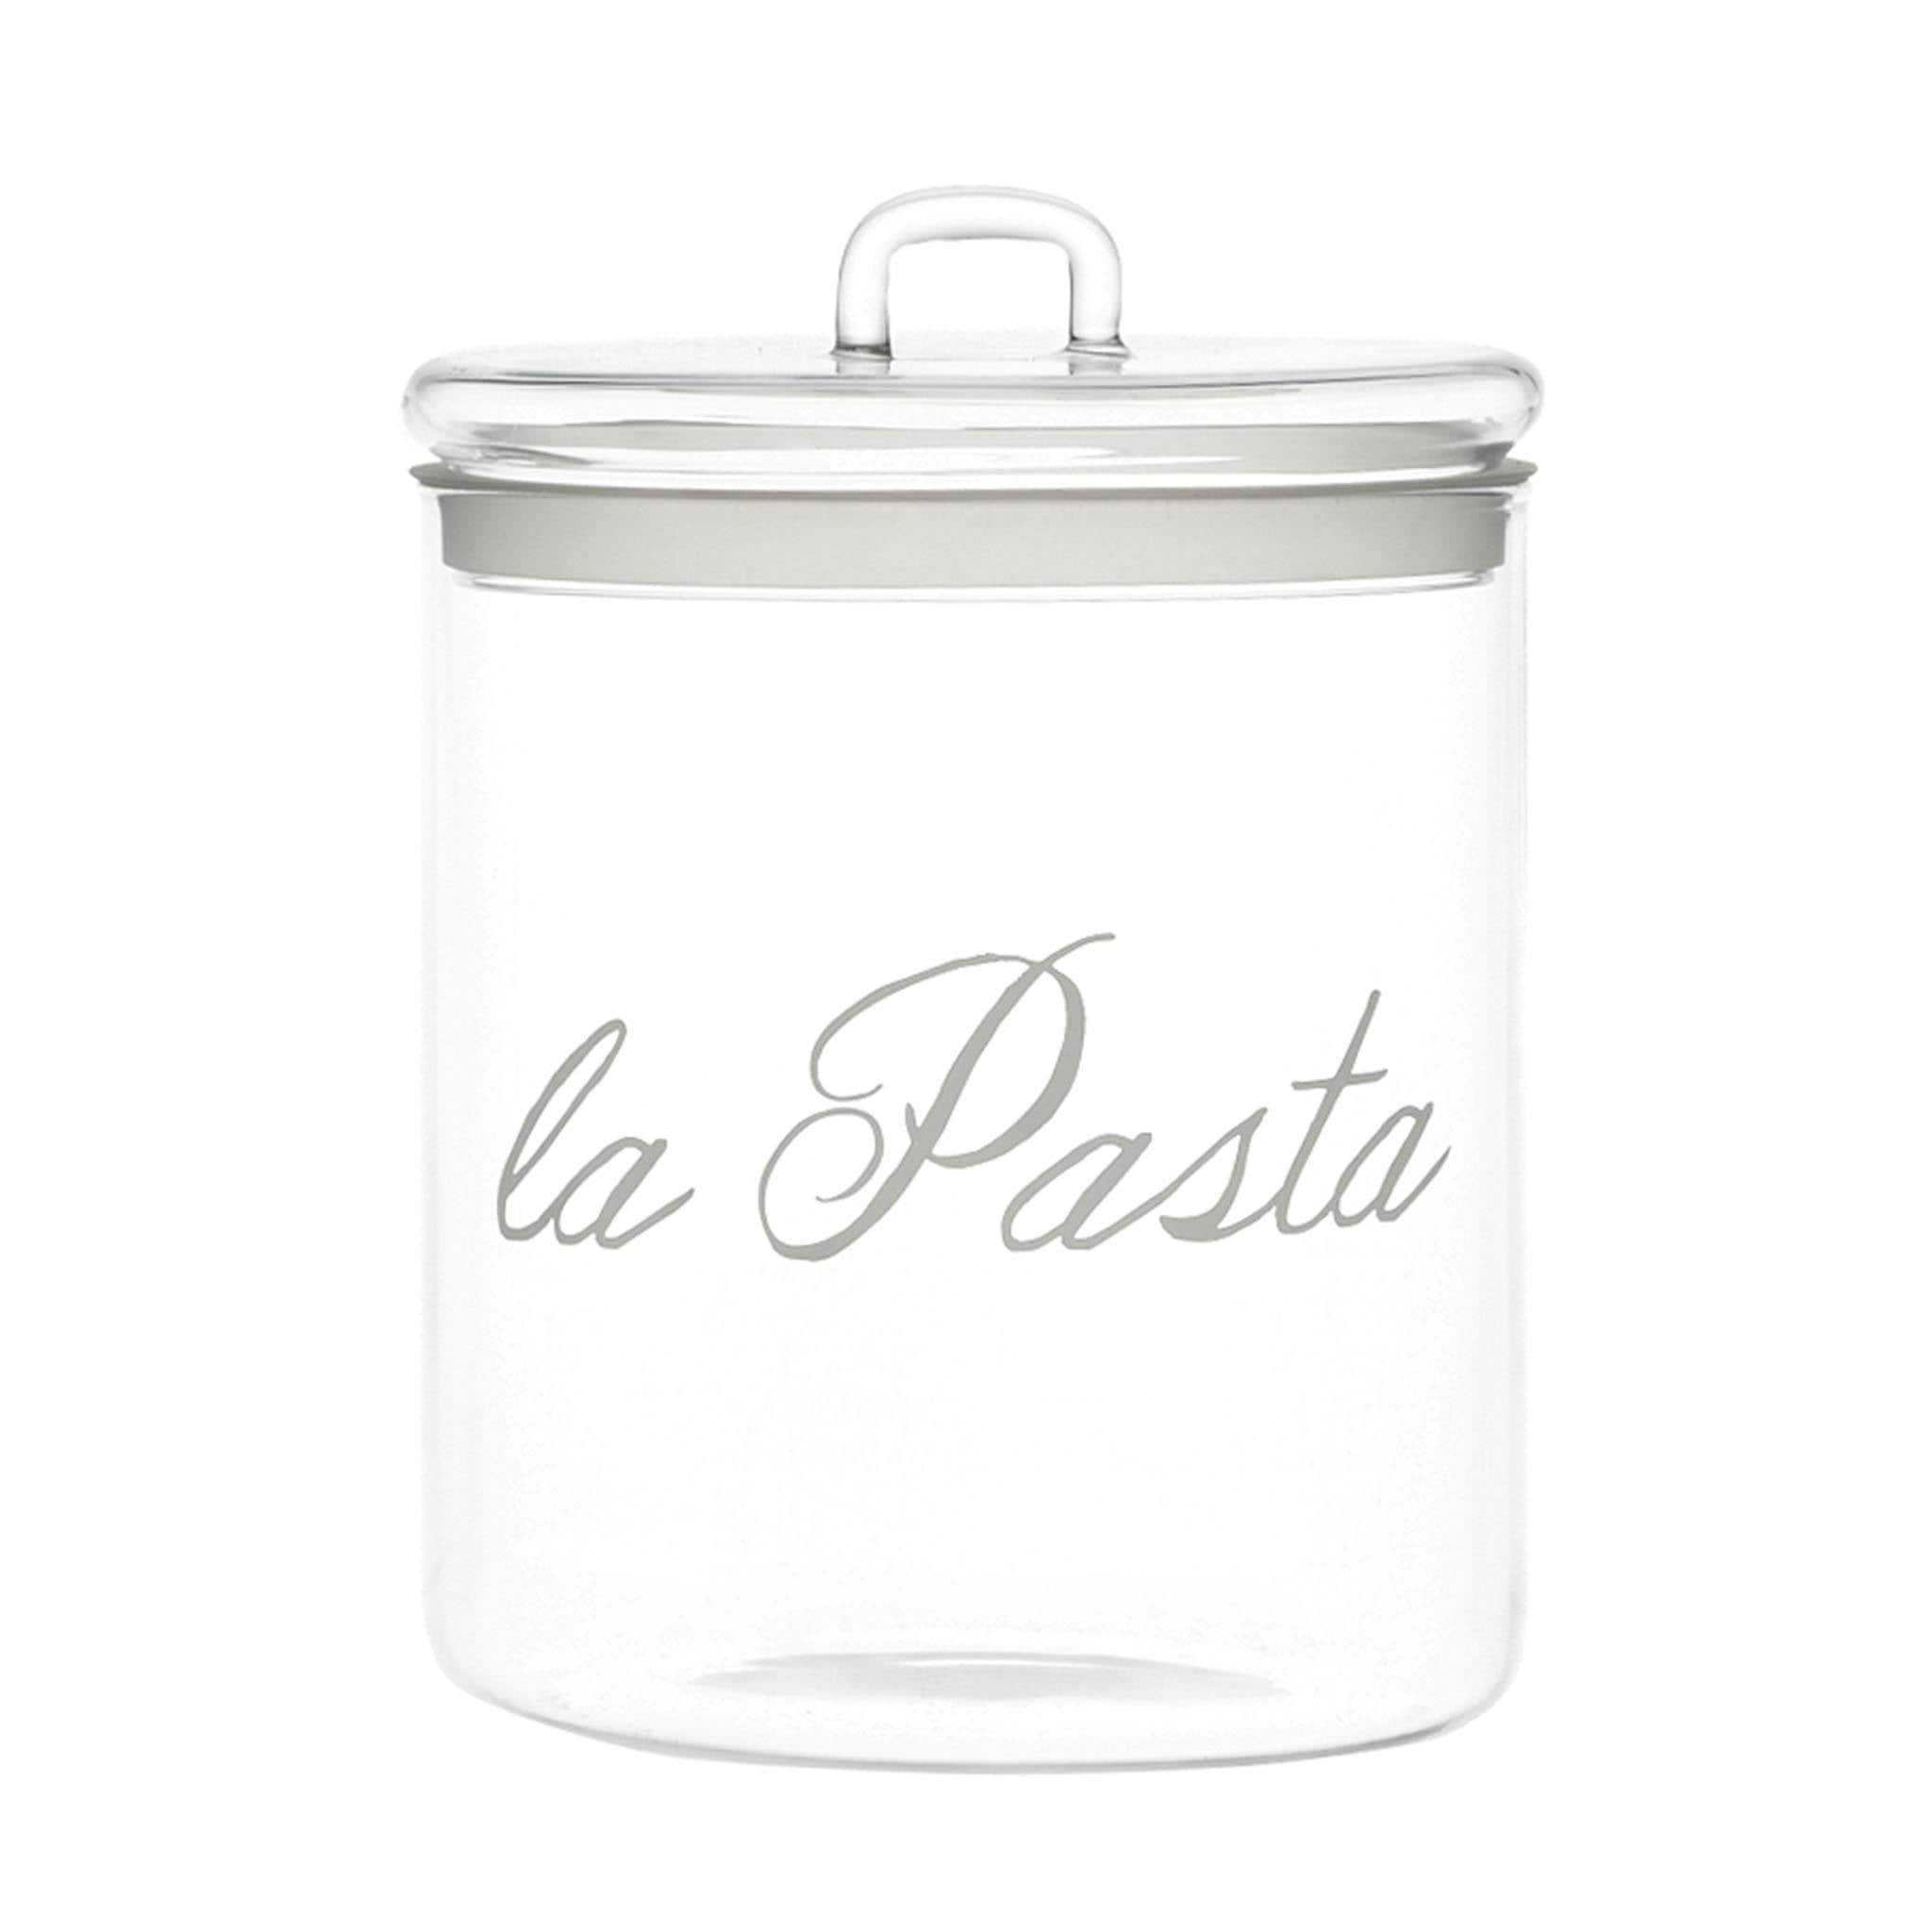 Jar the pasta